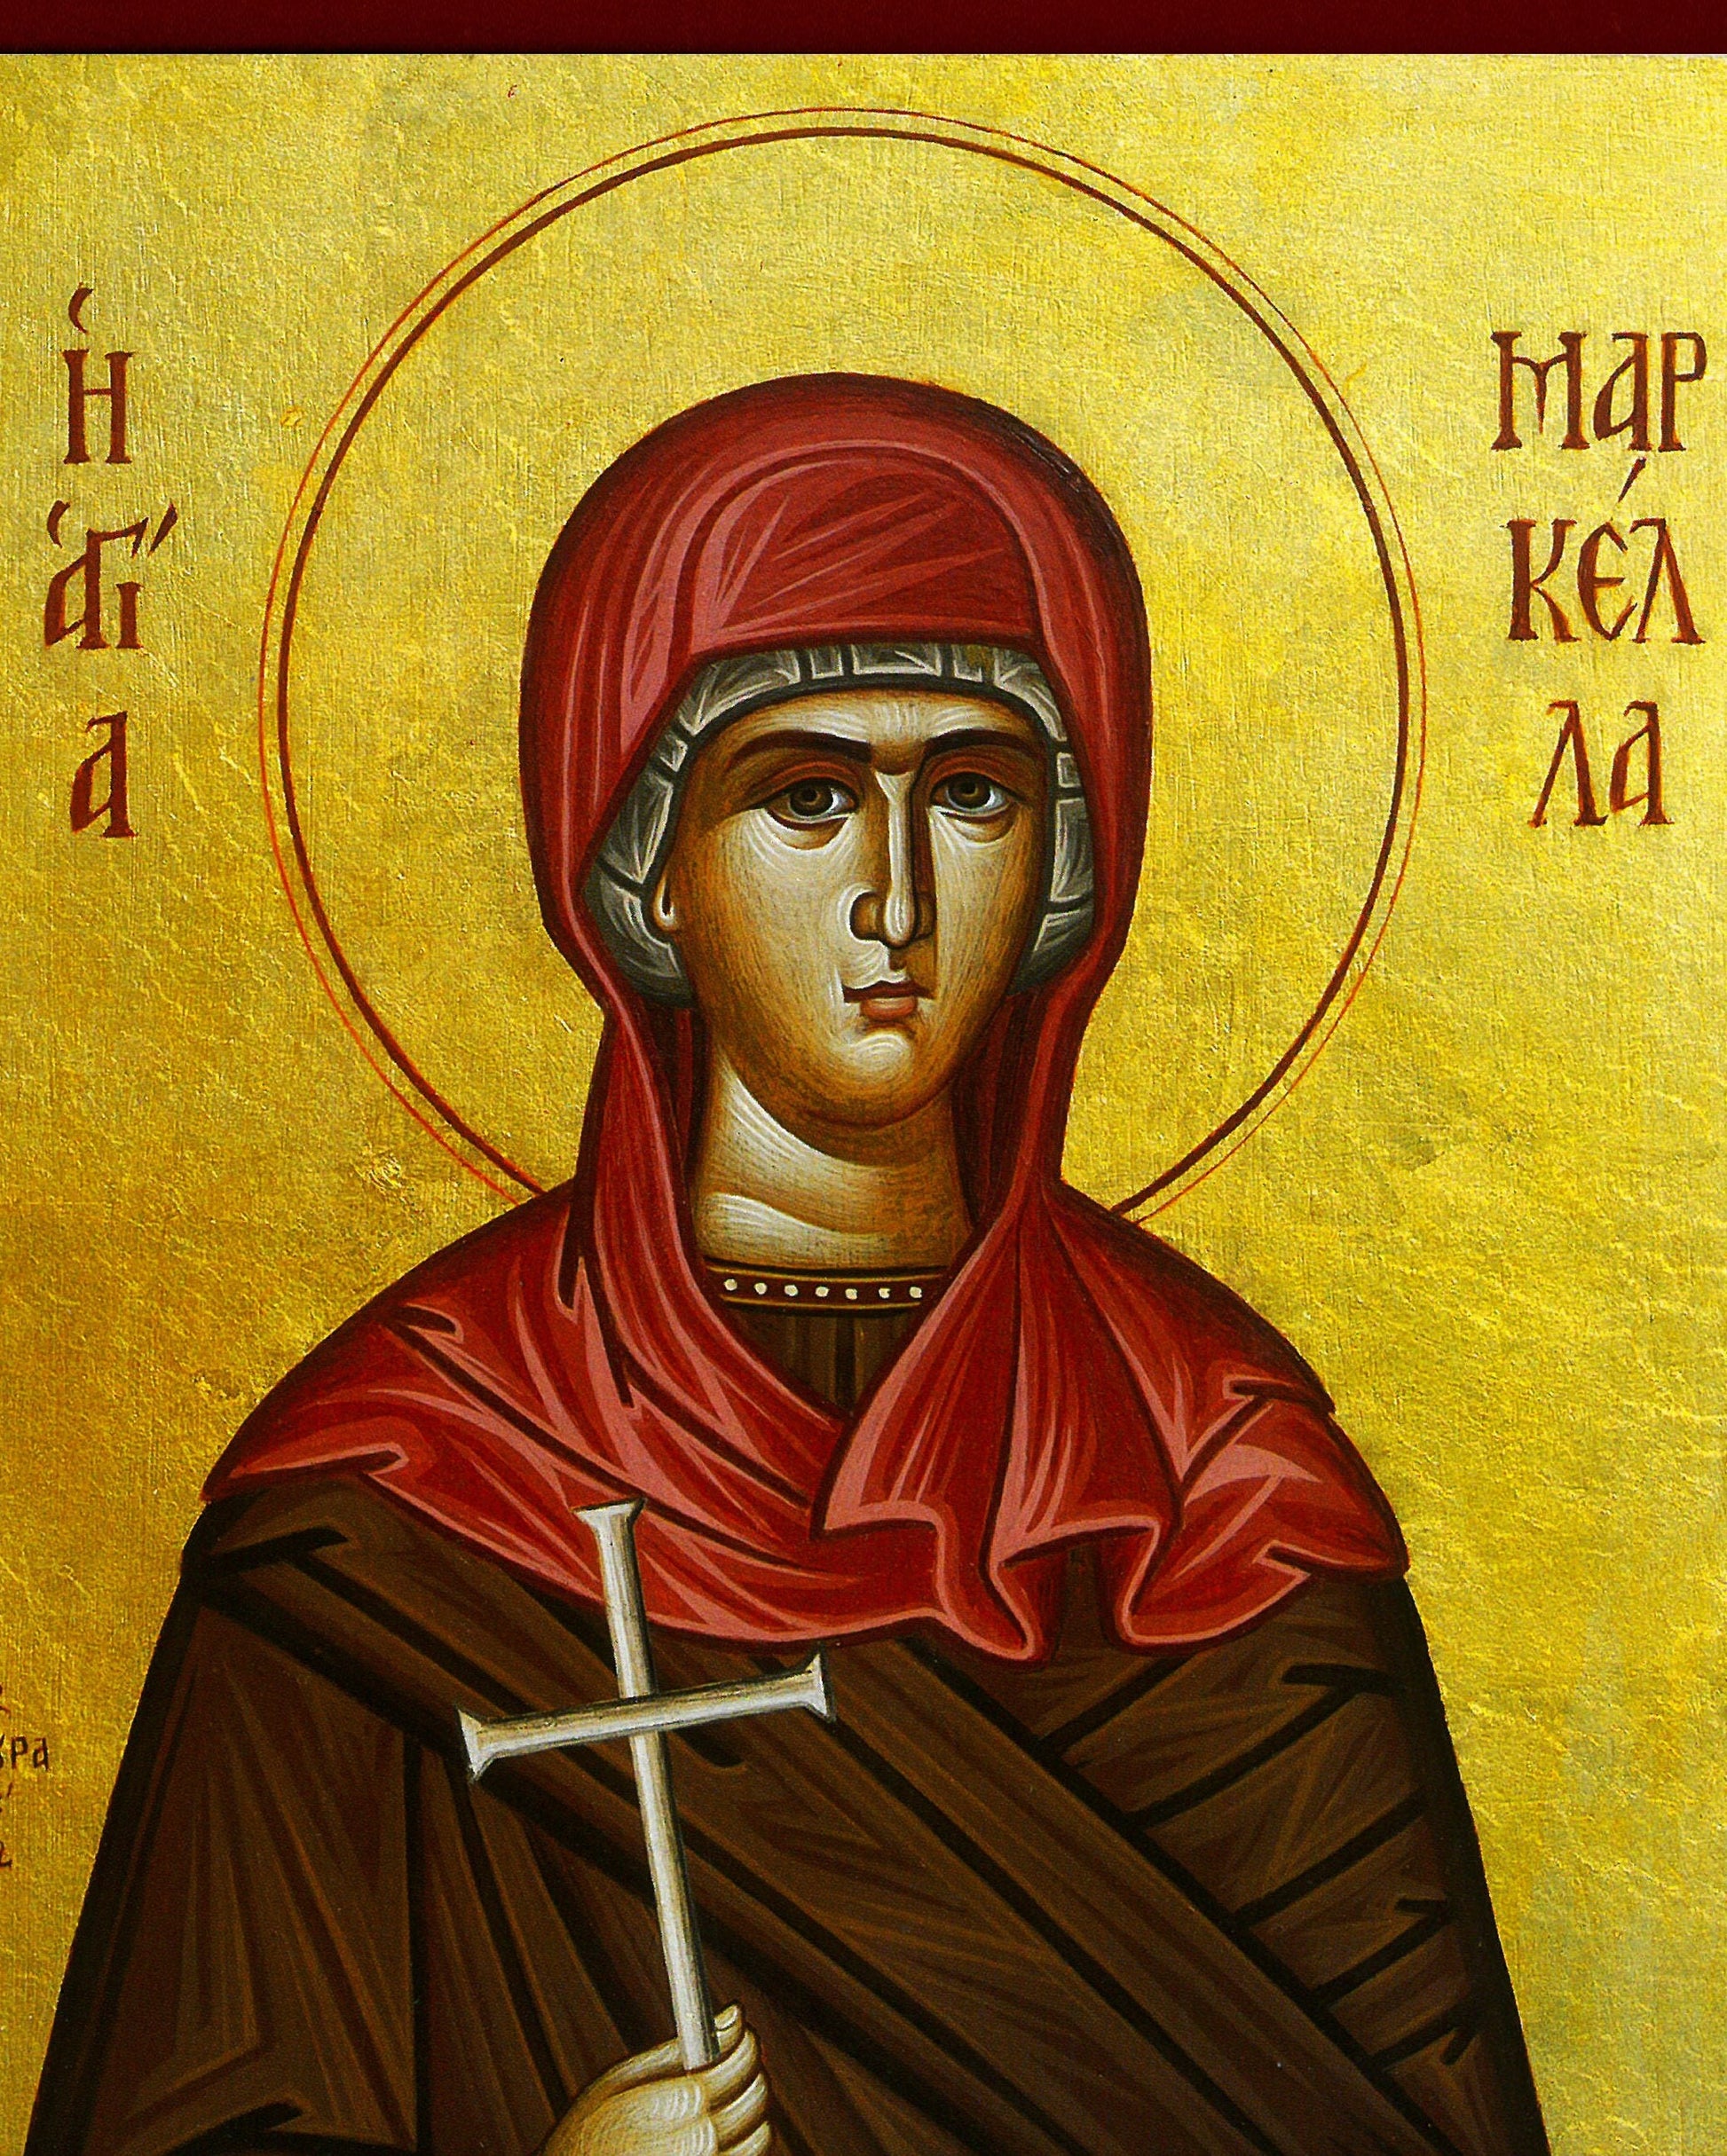 Saint Markella icon, Handmade Greek Orthodox icon of St Markella of Chios, Byzantine art wall hanging icon wood plaque, religious decor TheHolyArt